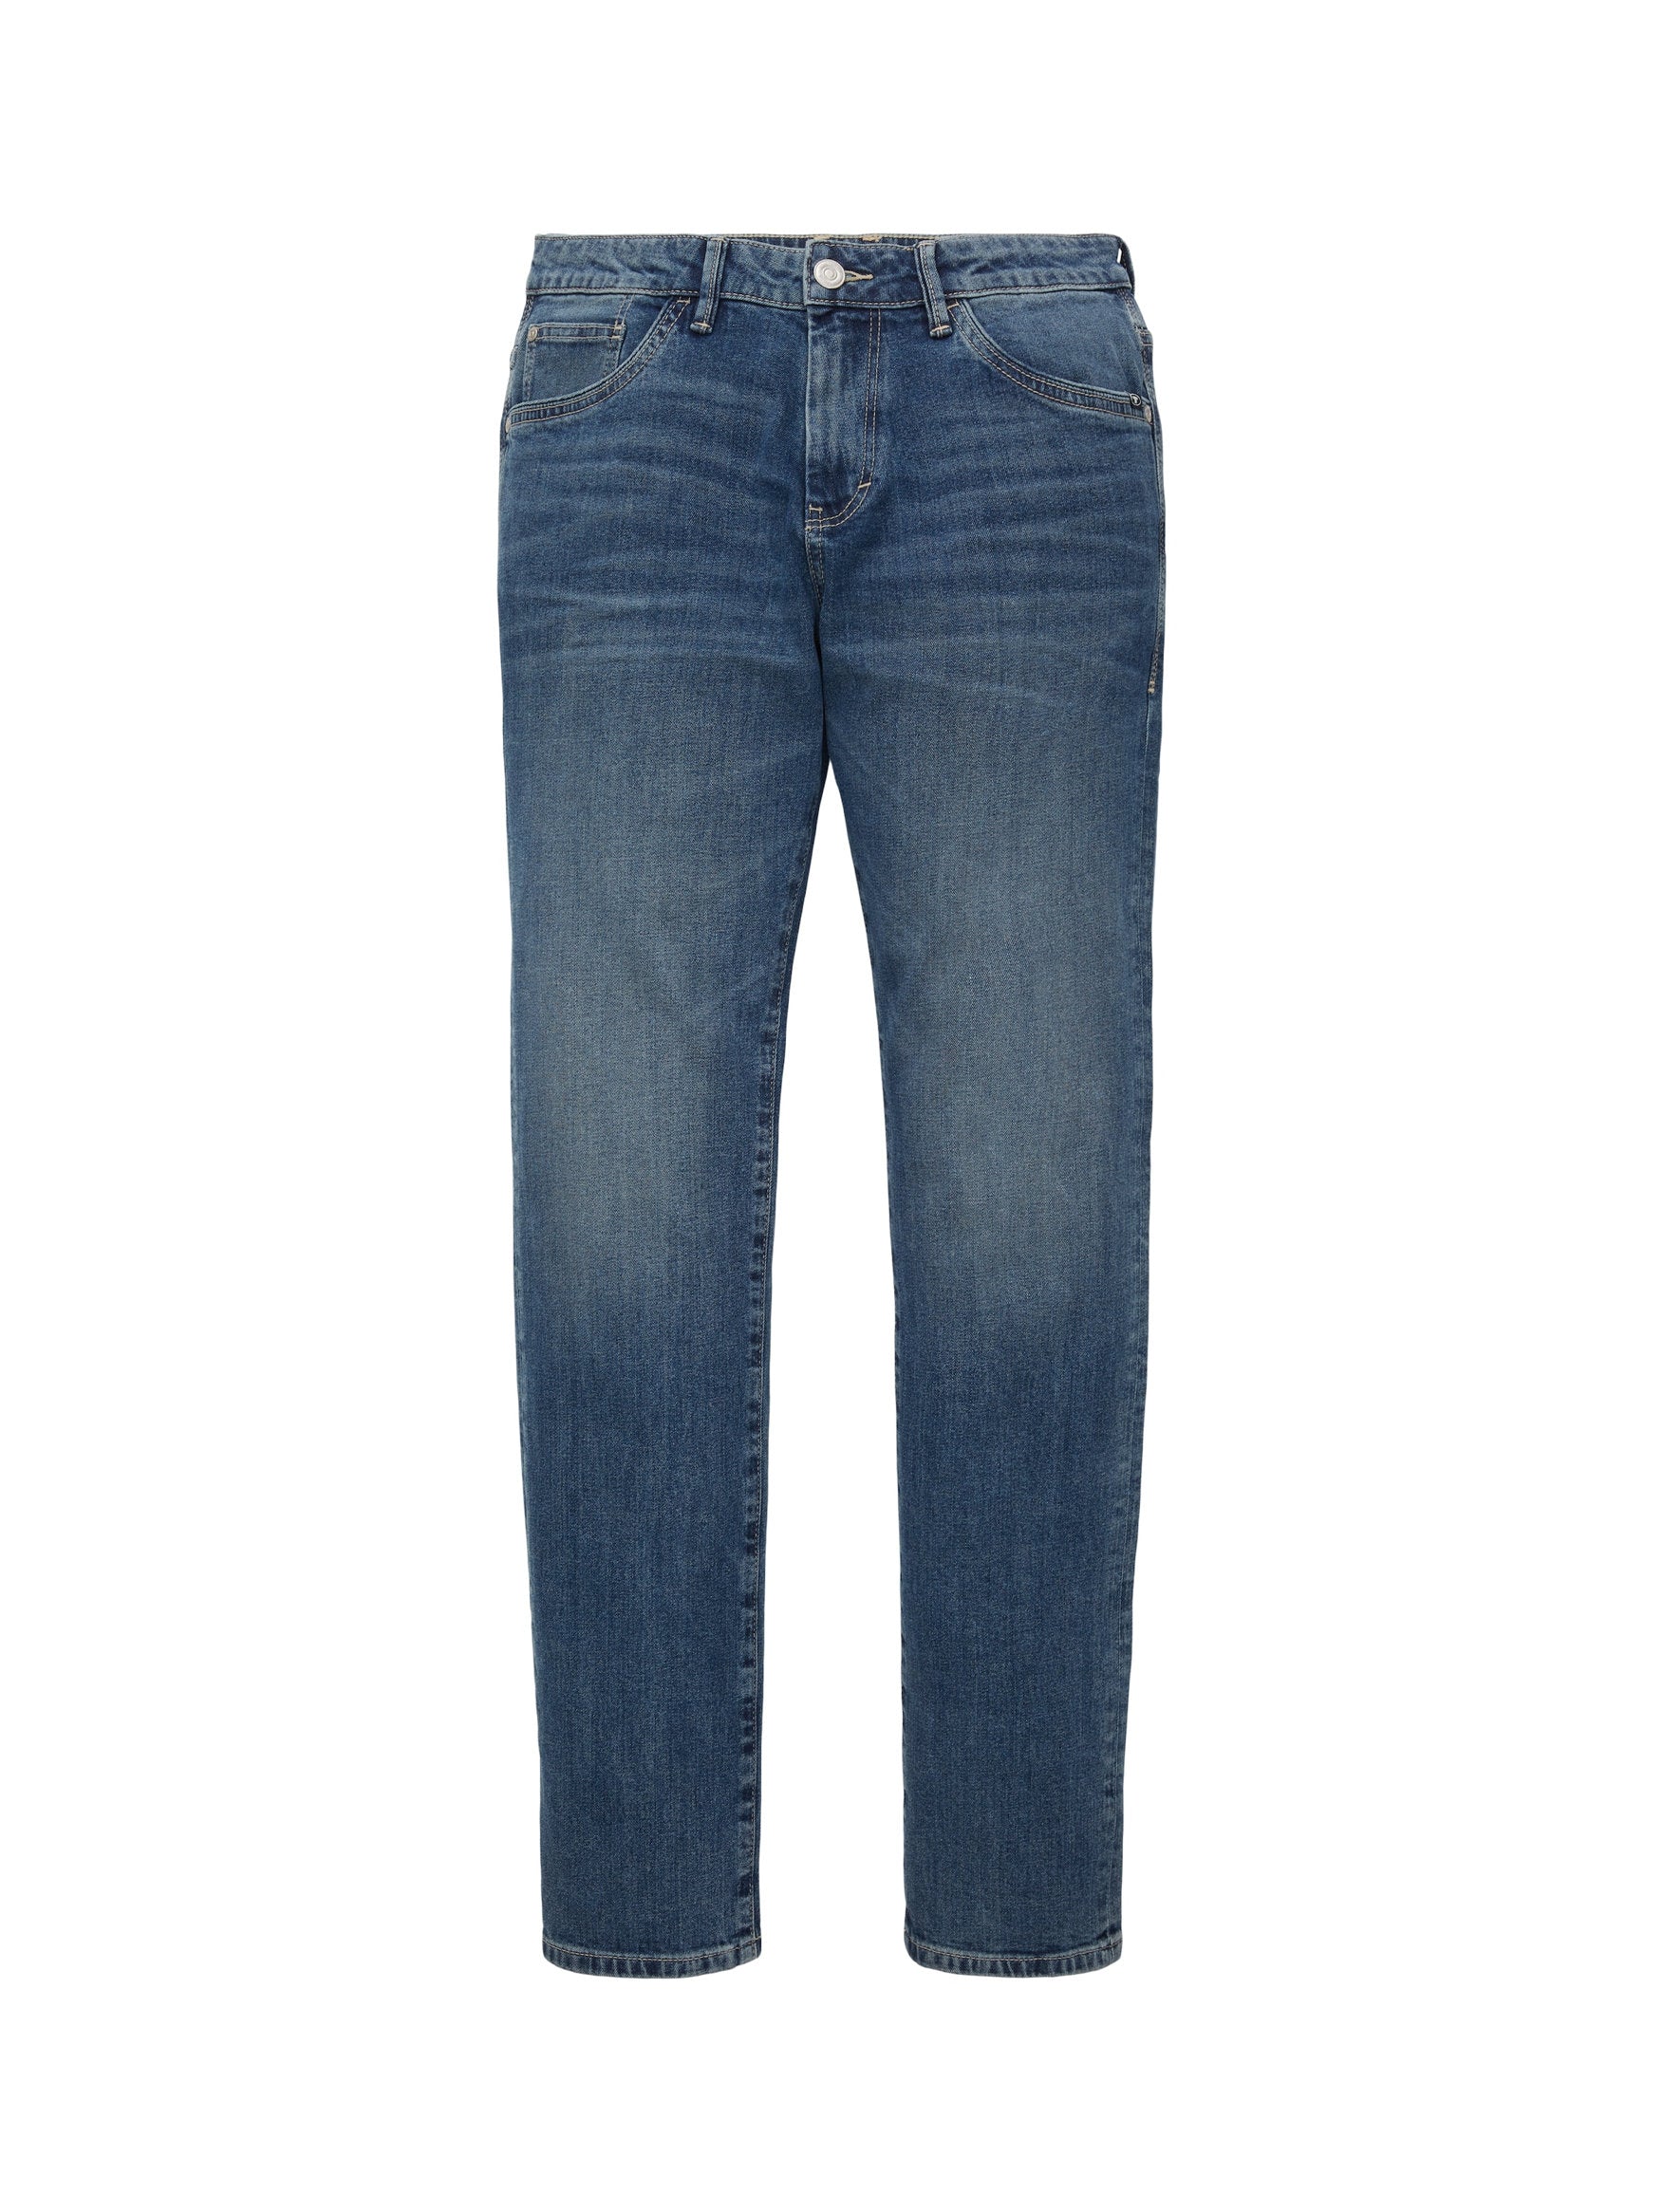 Standard Fit Jeans_1035878_10281_01